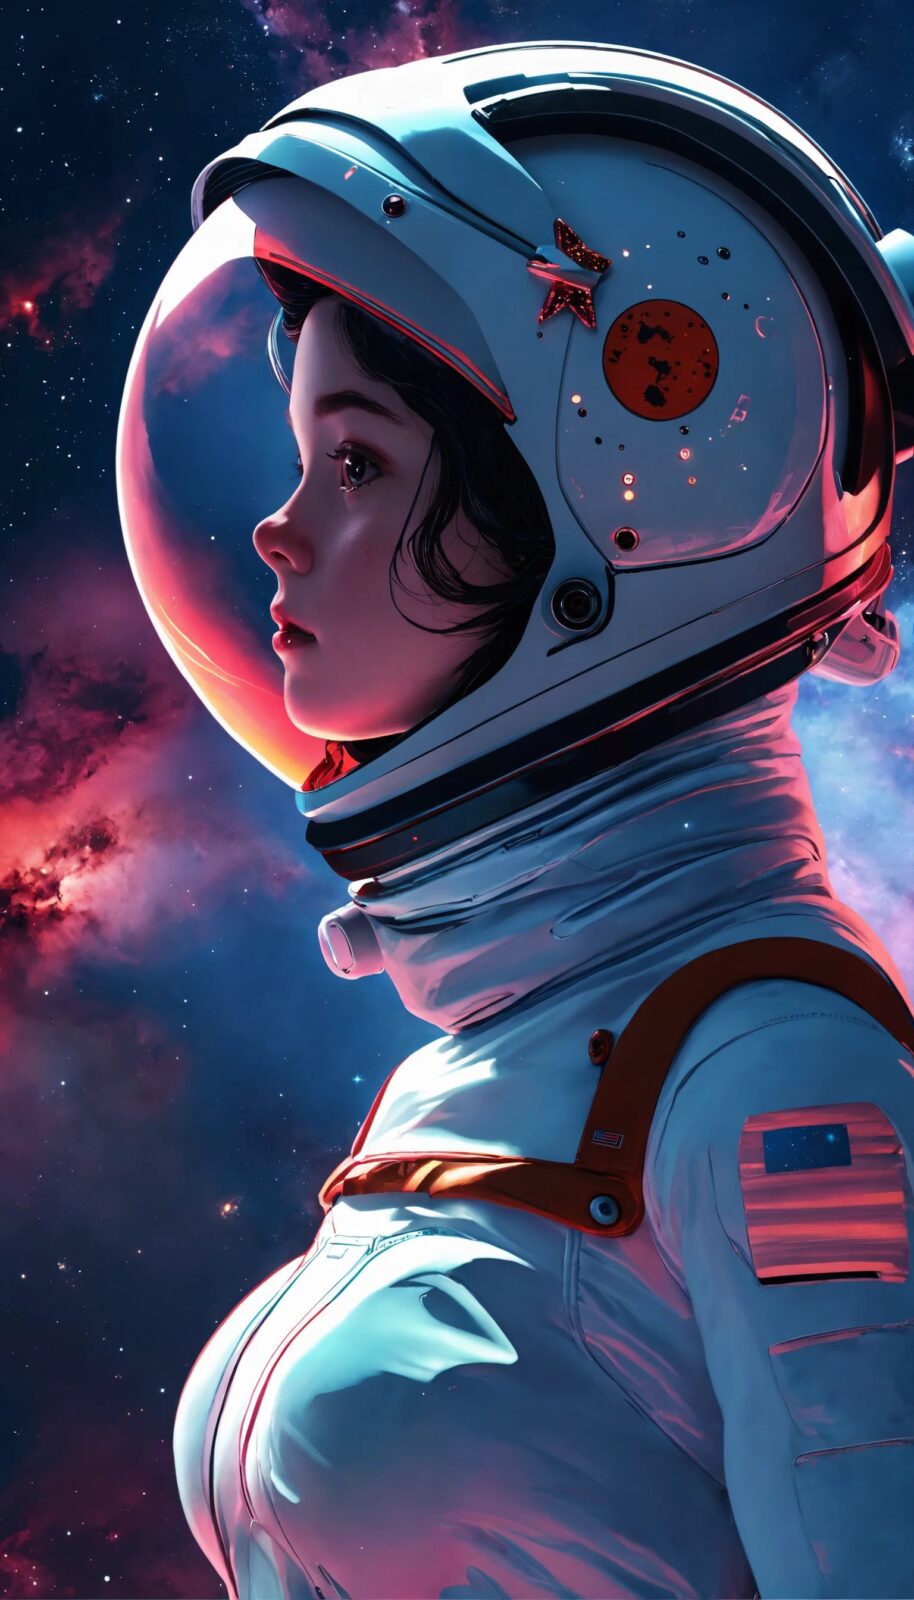 Astro Girl iPhone Wallpaper 4K | Free Download